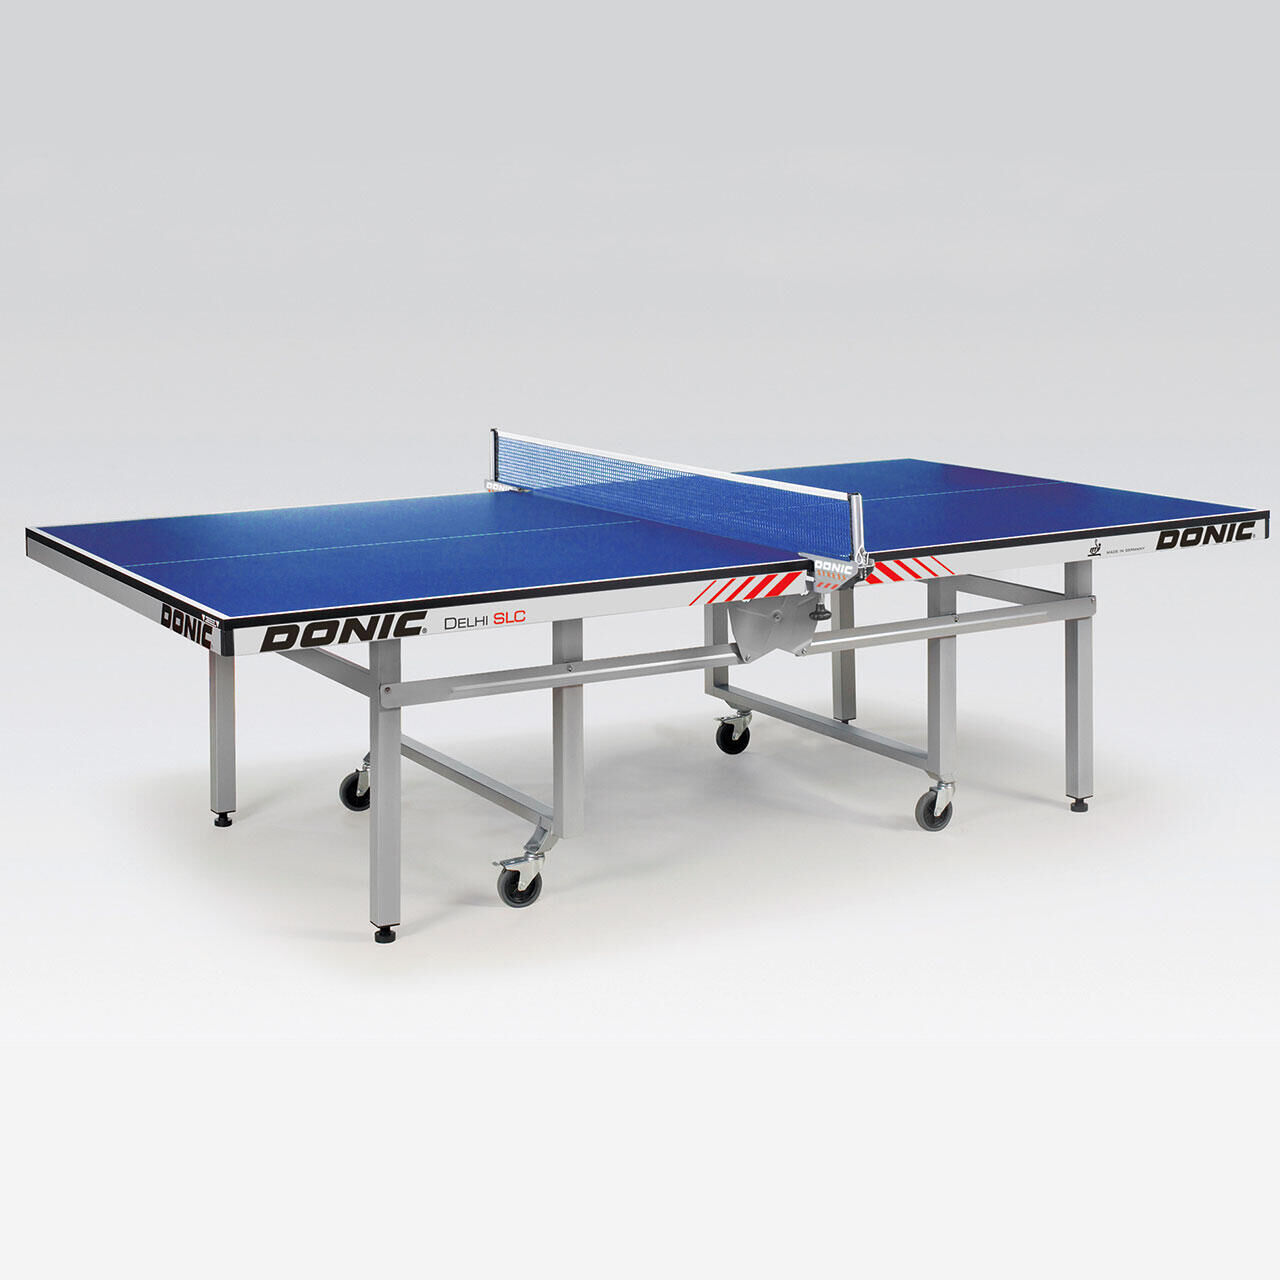 DONIC Donic Delhi SLC Blue Table Tennis Table